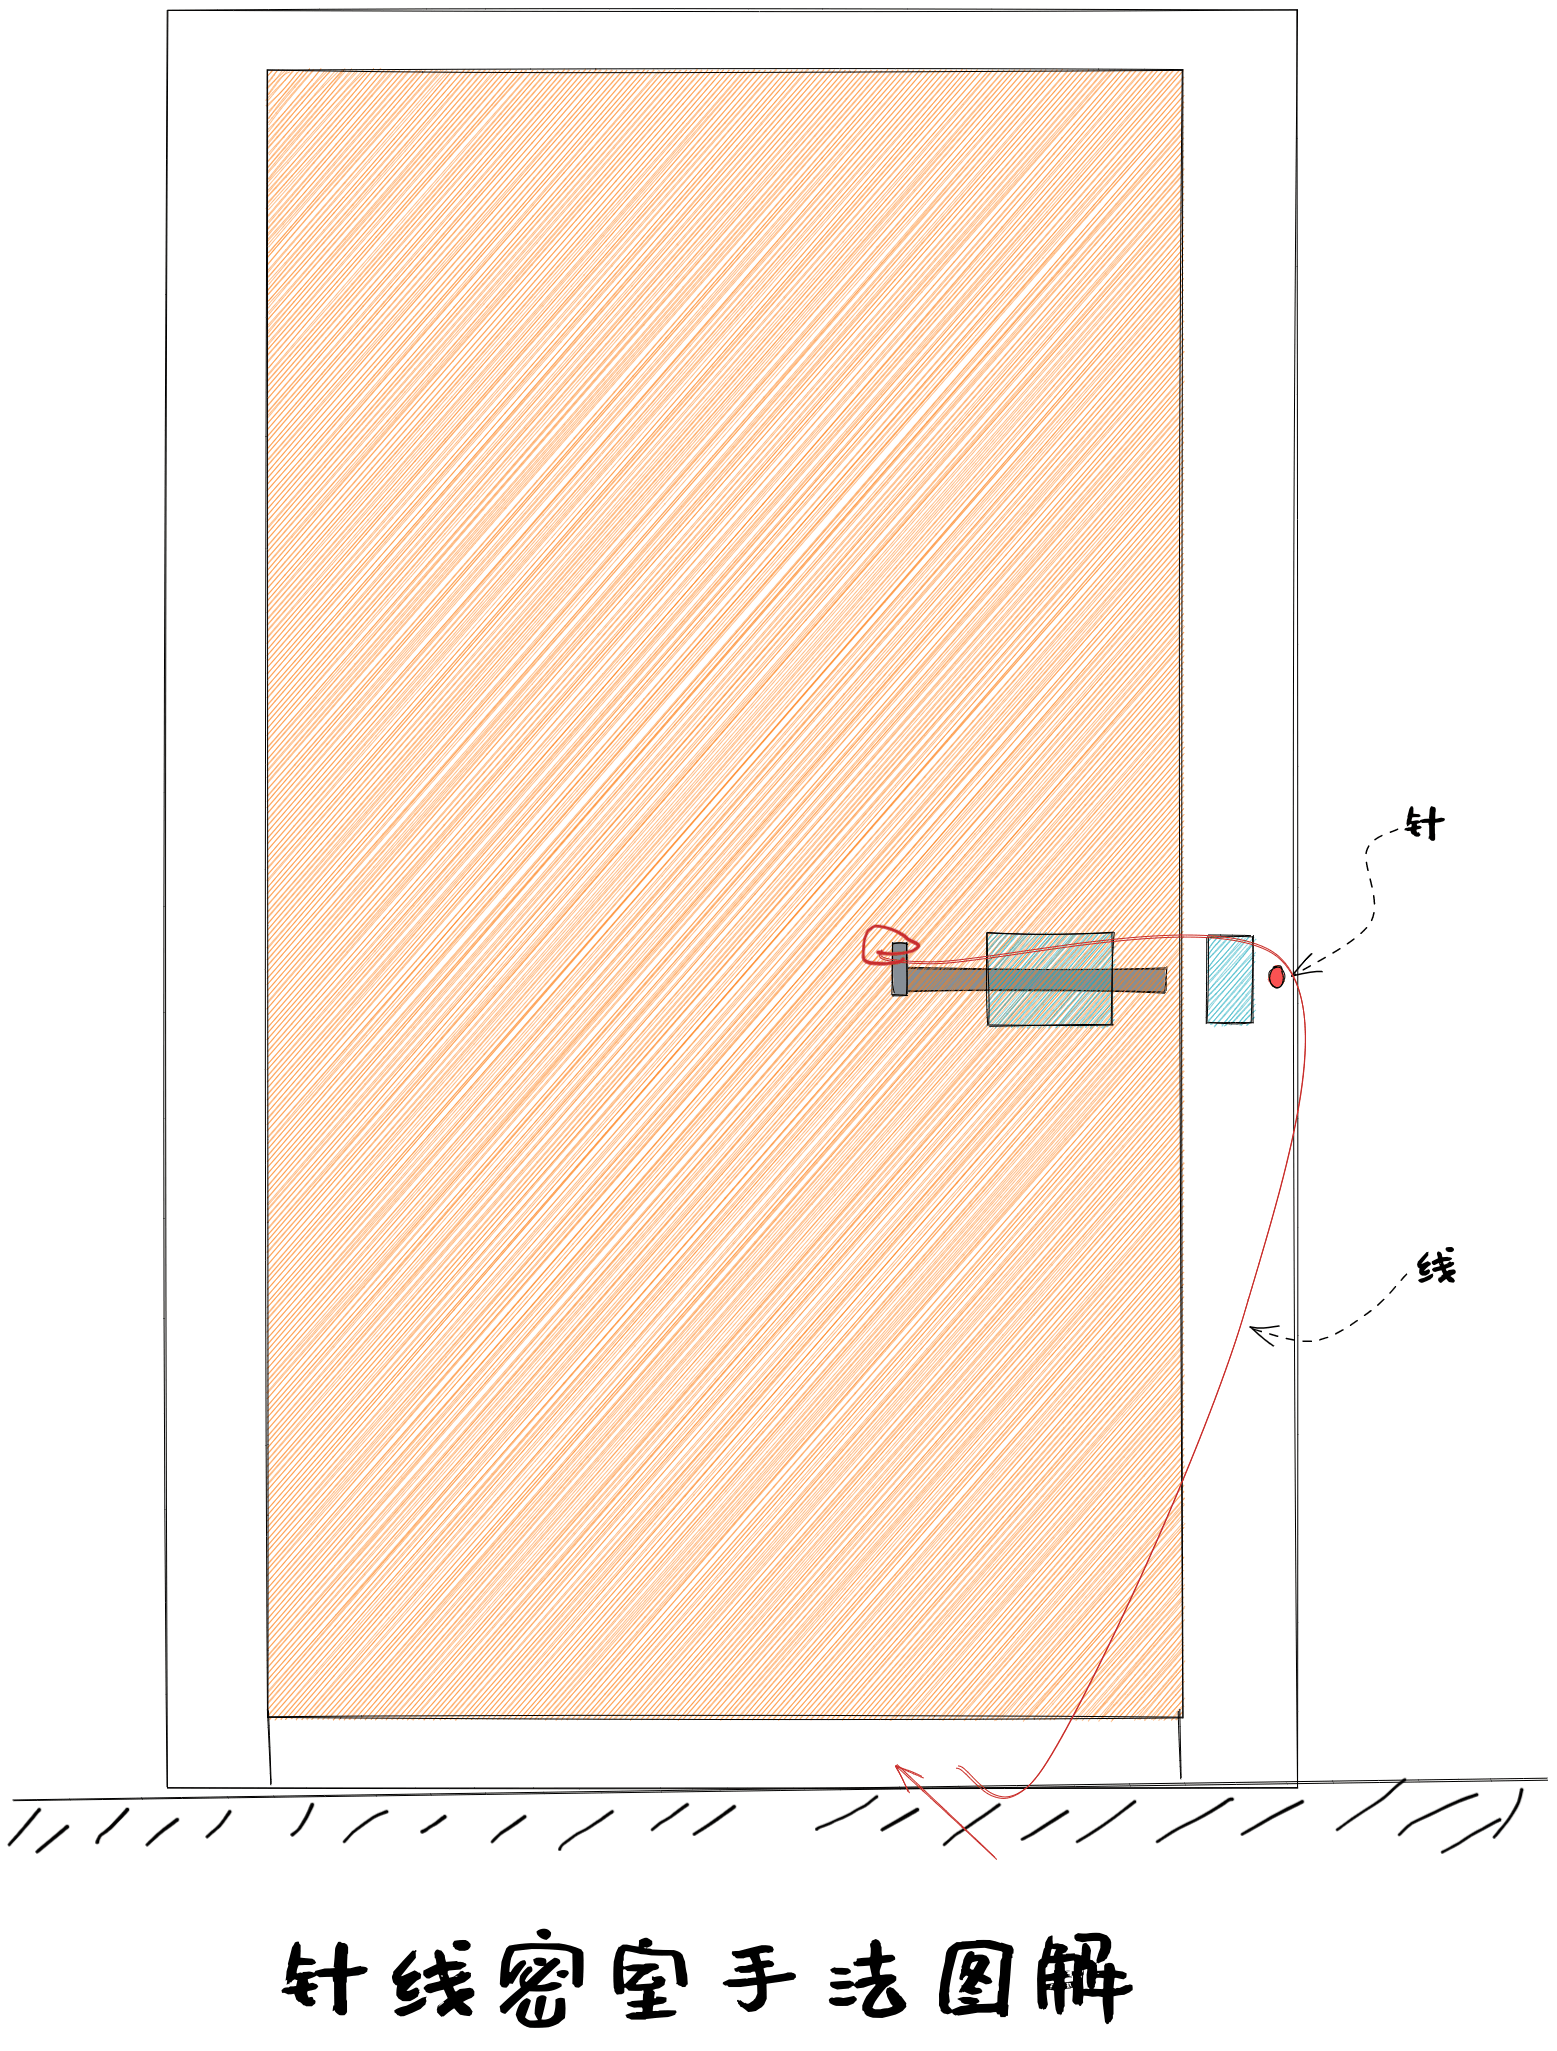 Figure 1: 针线密室手法